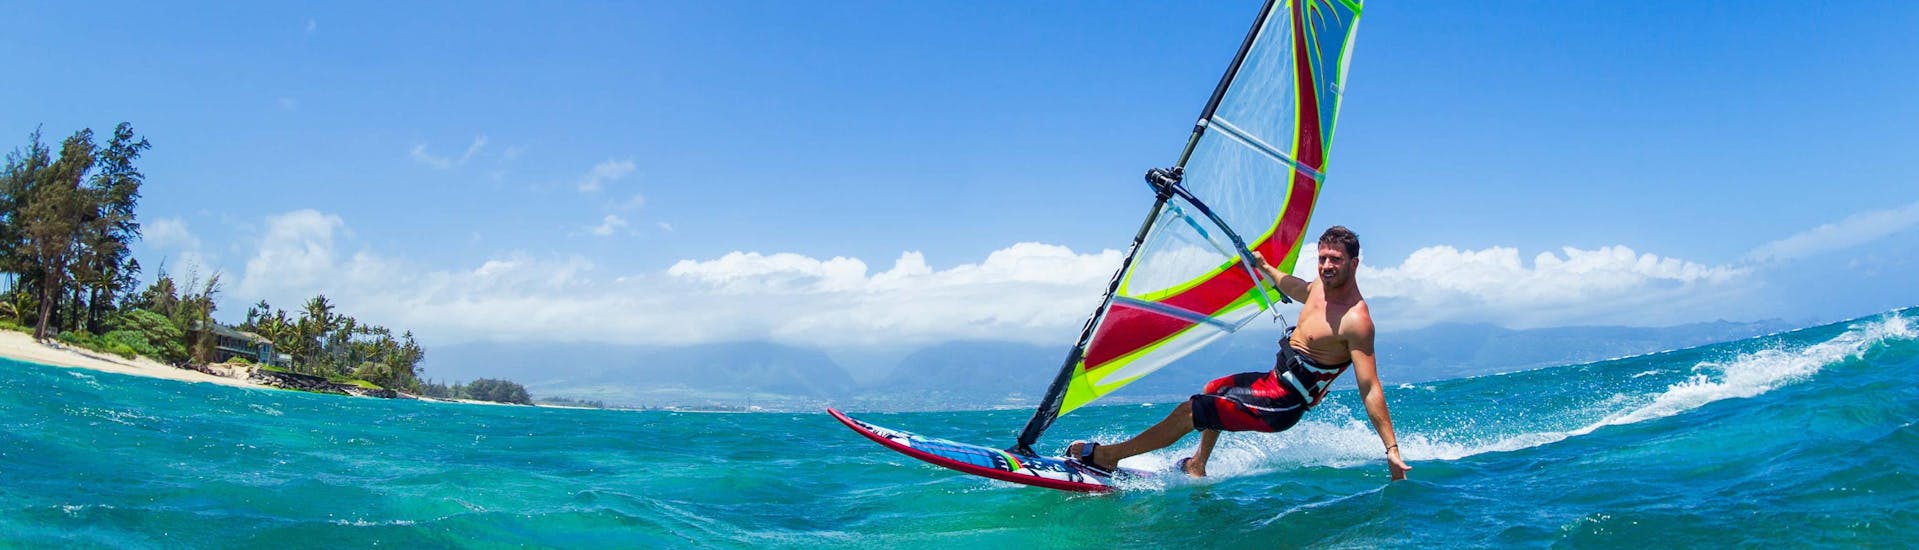 Kitesurfing & Windsurfing (c) Shutterstock